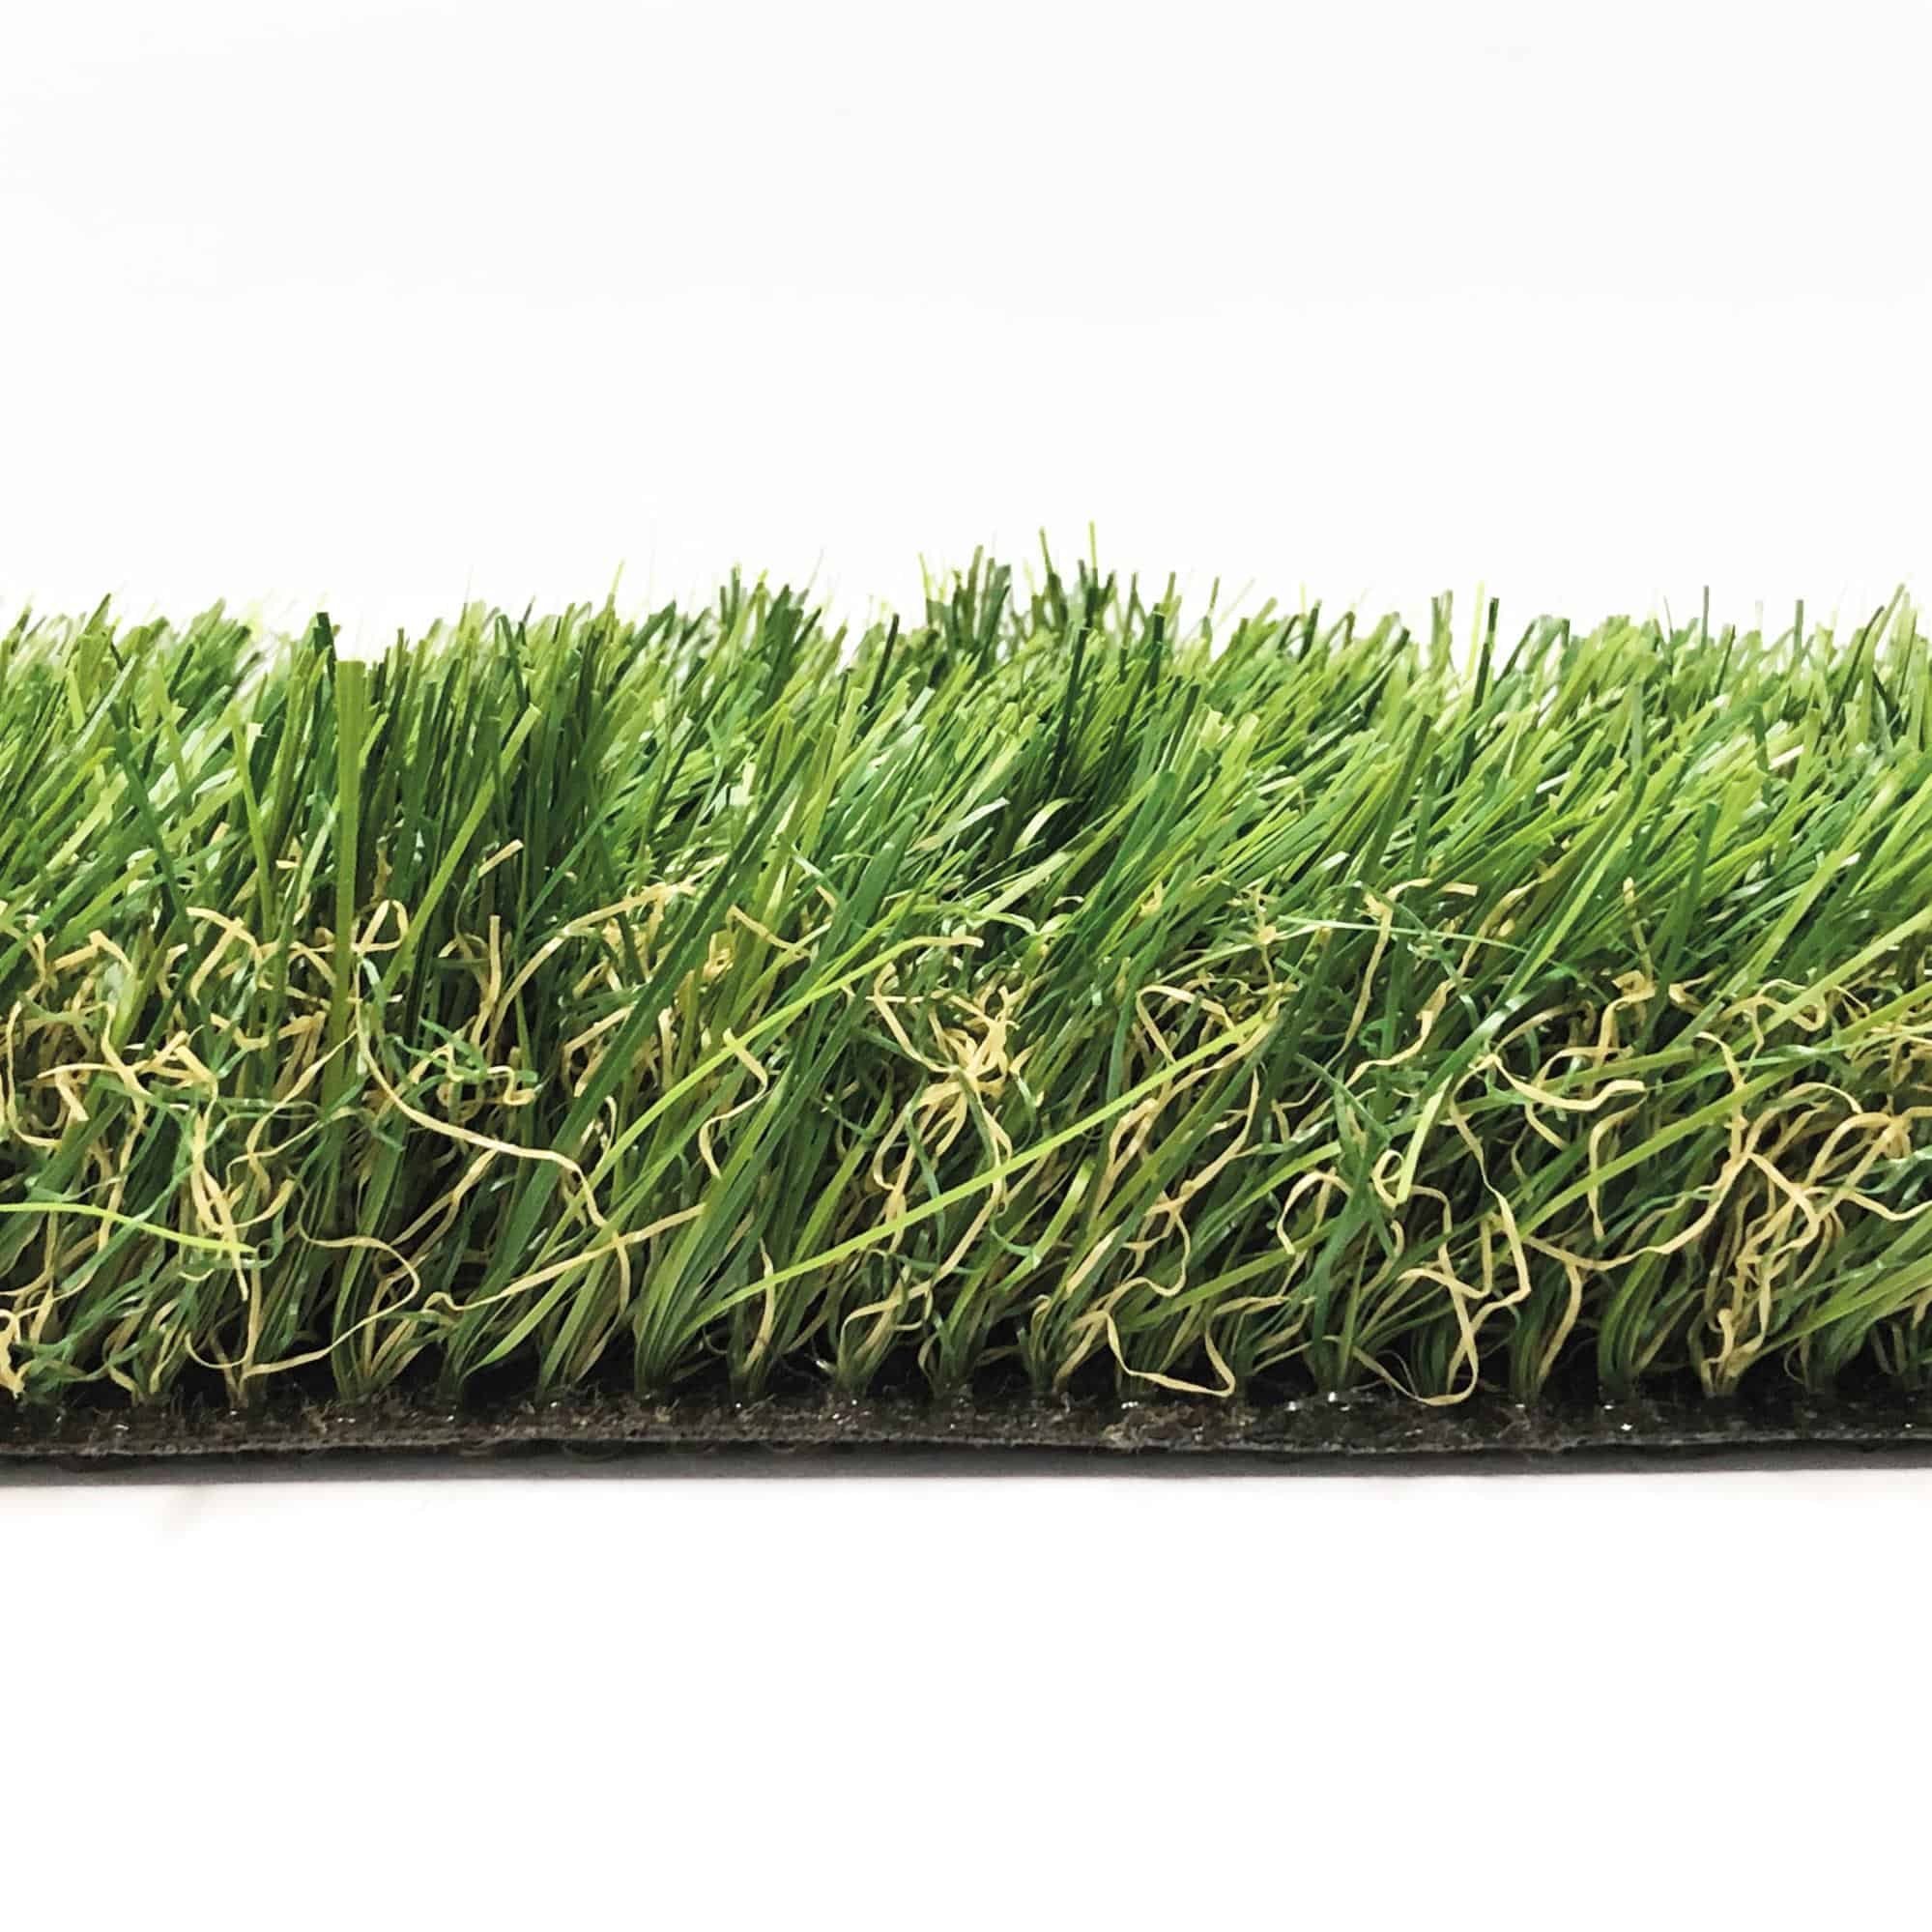 CORE Lawn Natural Artificial Grass 4m Wide Roll 1m